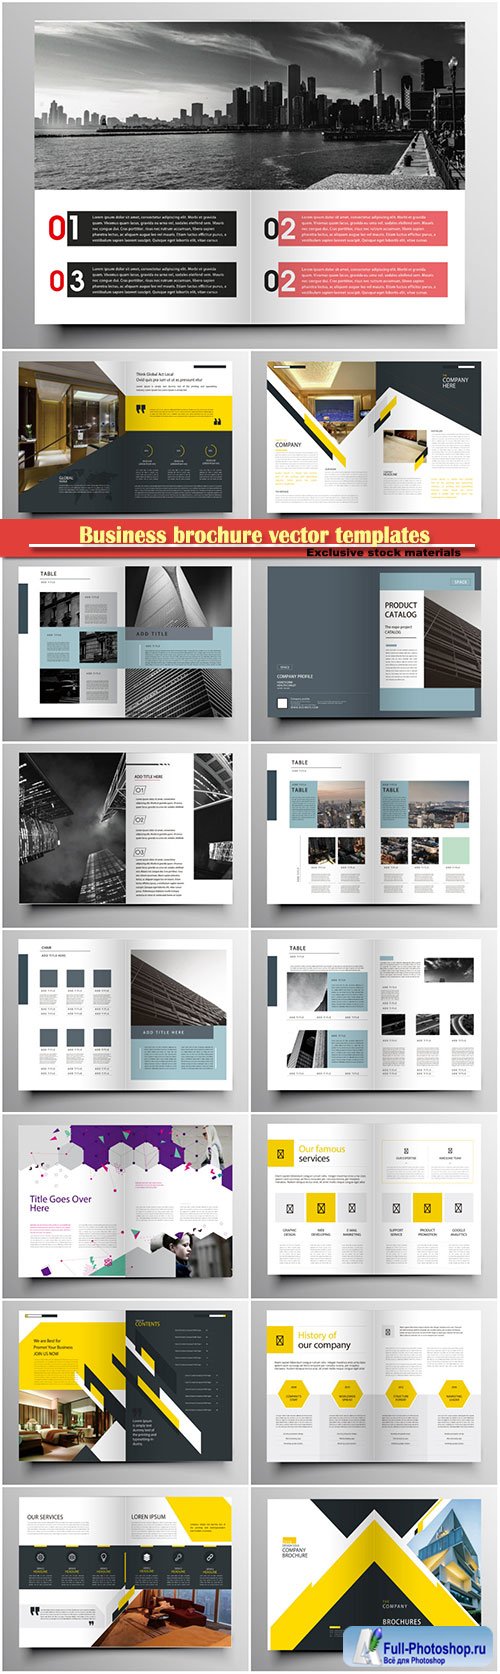 Business brochure vector templates, magazine cover, business mockup, education, presentation, report # 66